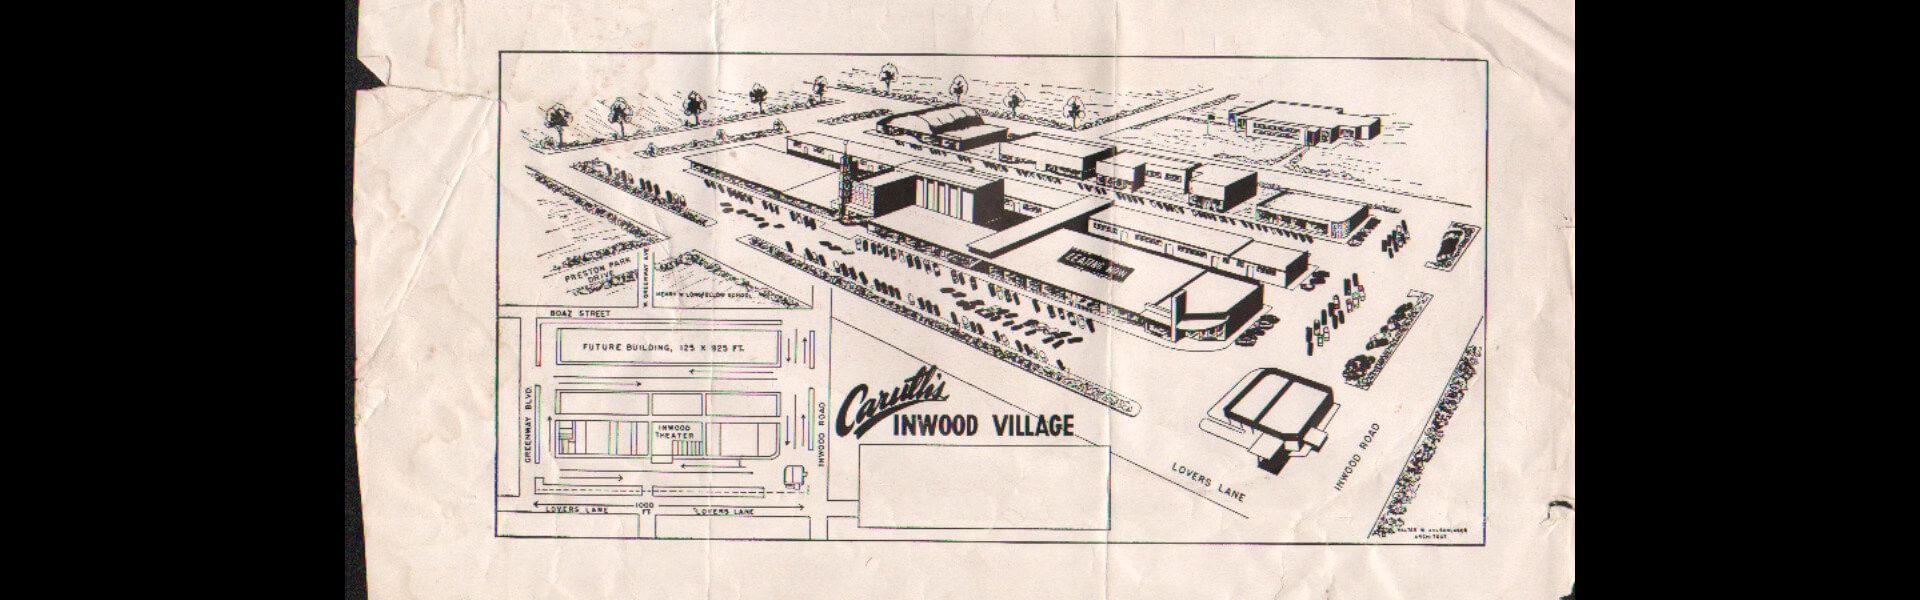 1949 Original Layout of Caruth’s Inwood Village